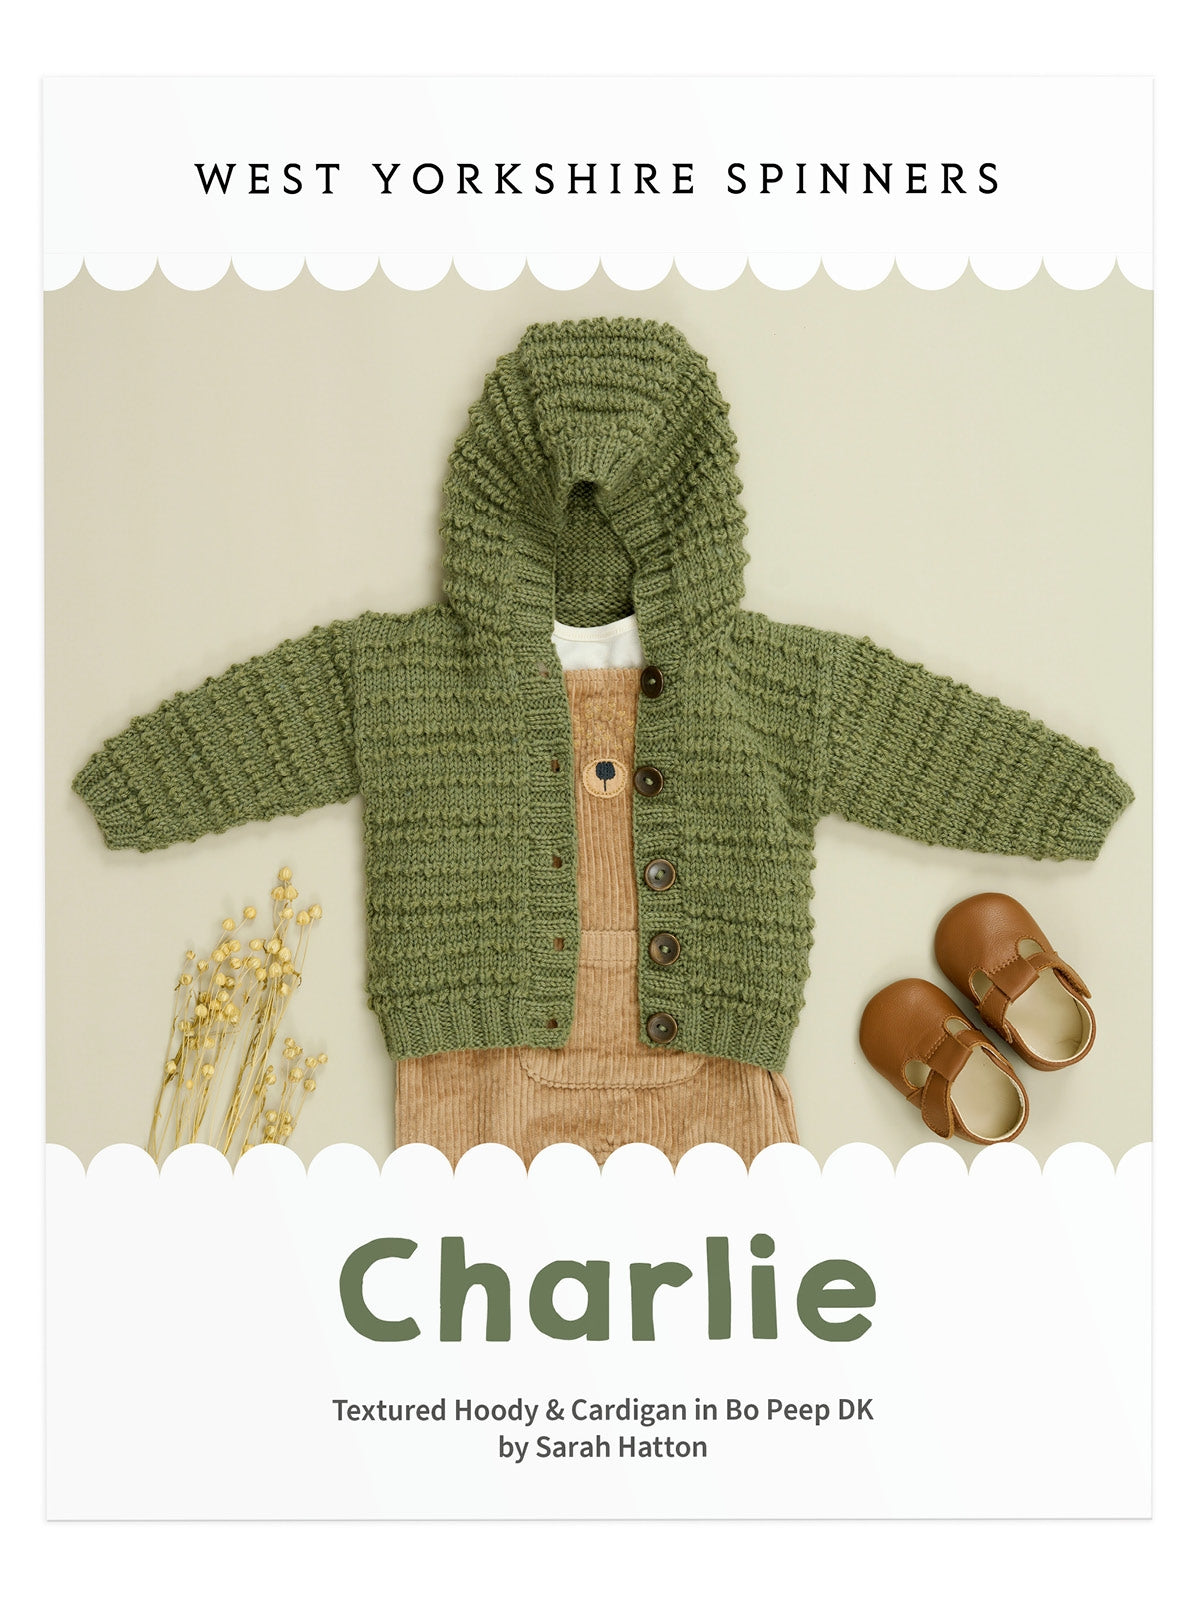 WYS Charlie: Textured Hoody & Cardigan in Bo Peep DK by Sarah Hatton - Knitting Kit